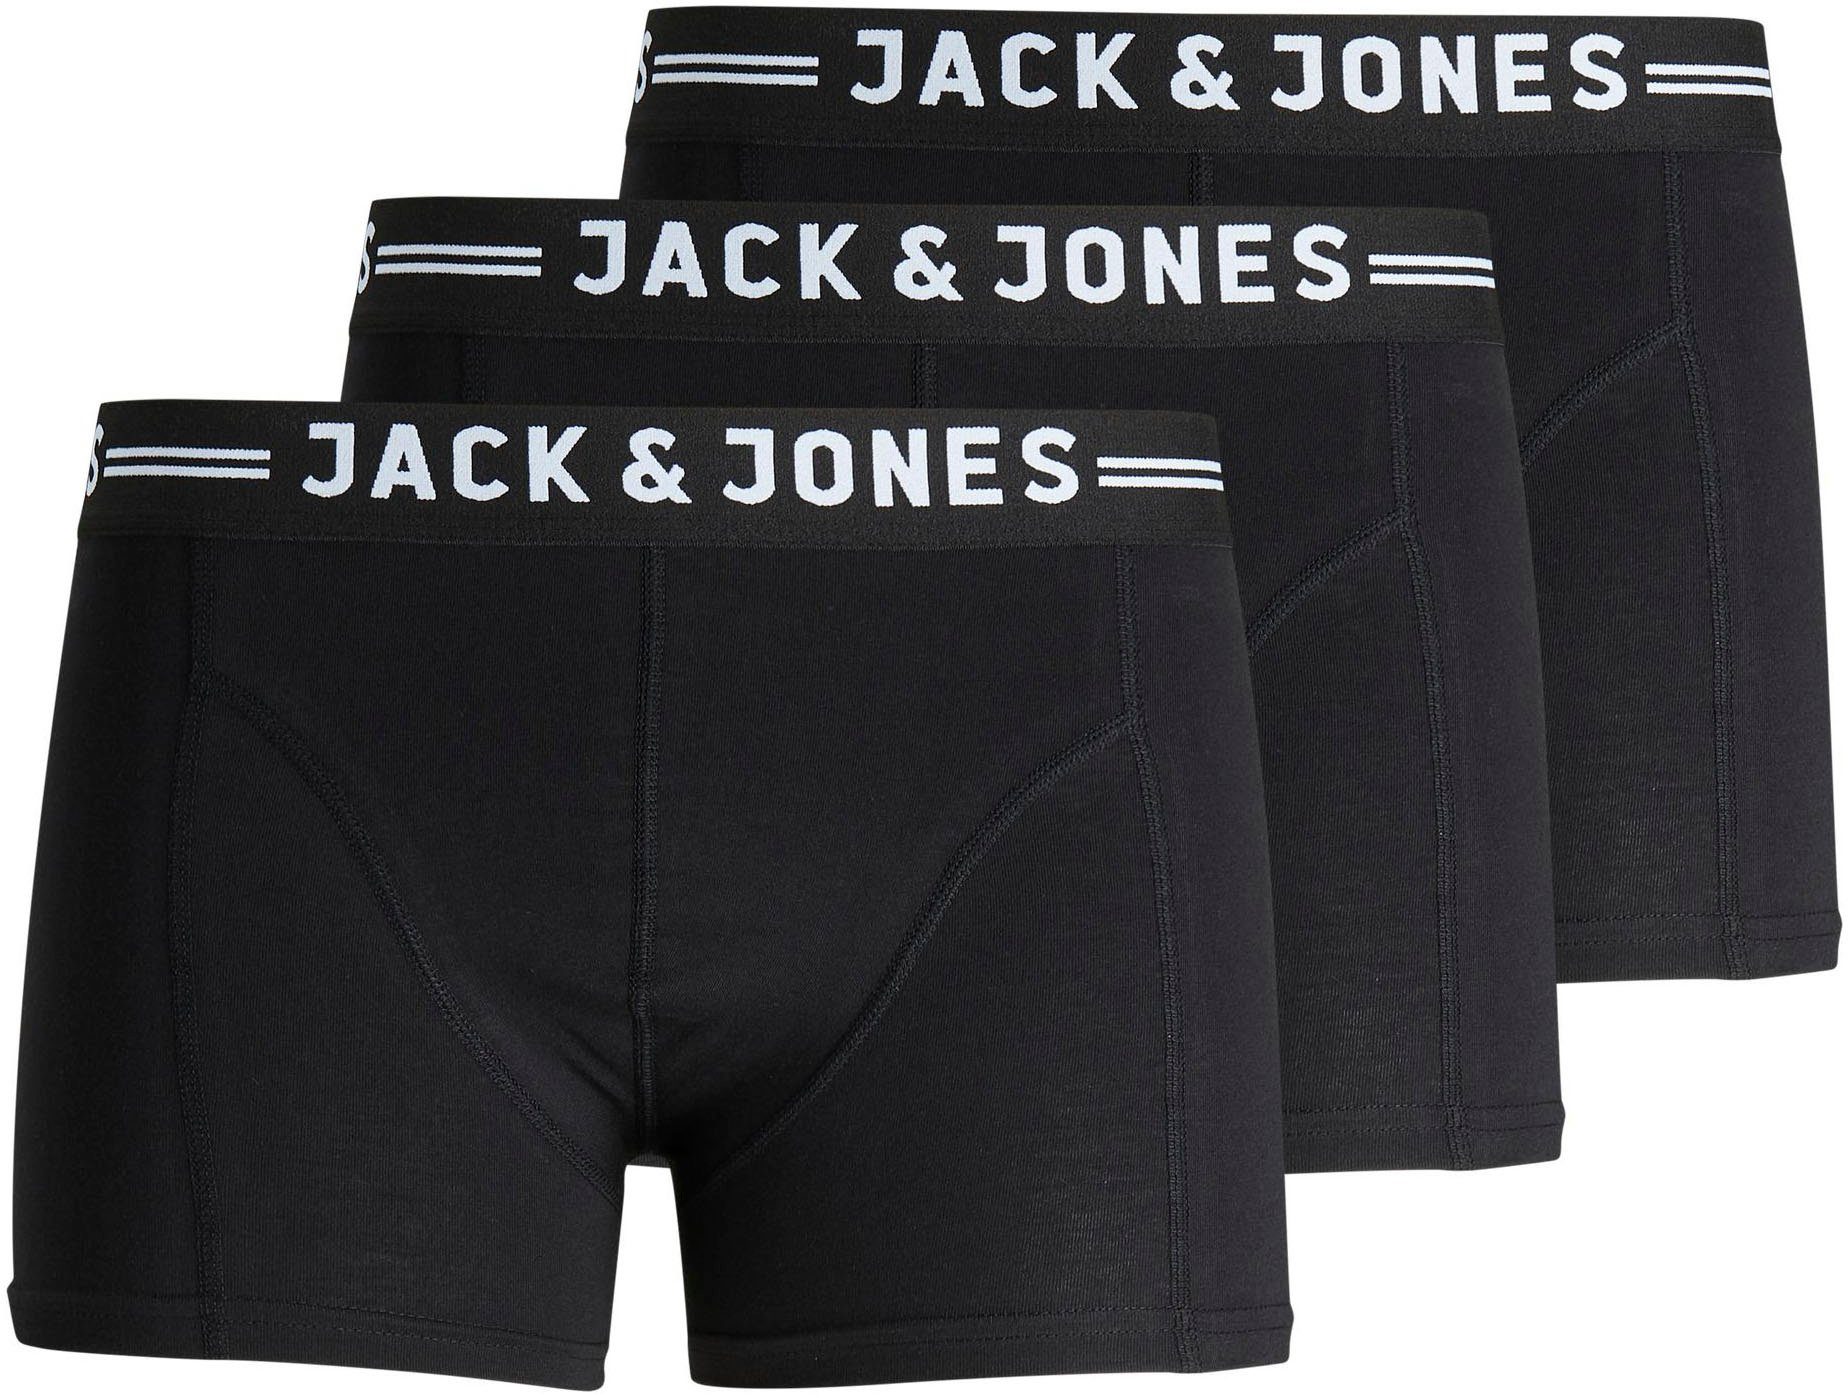 Jack & Jones Boxer Sense Trunks (Packung, 3-St) schwarz, schwarz, schwarz